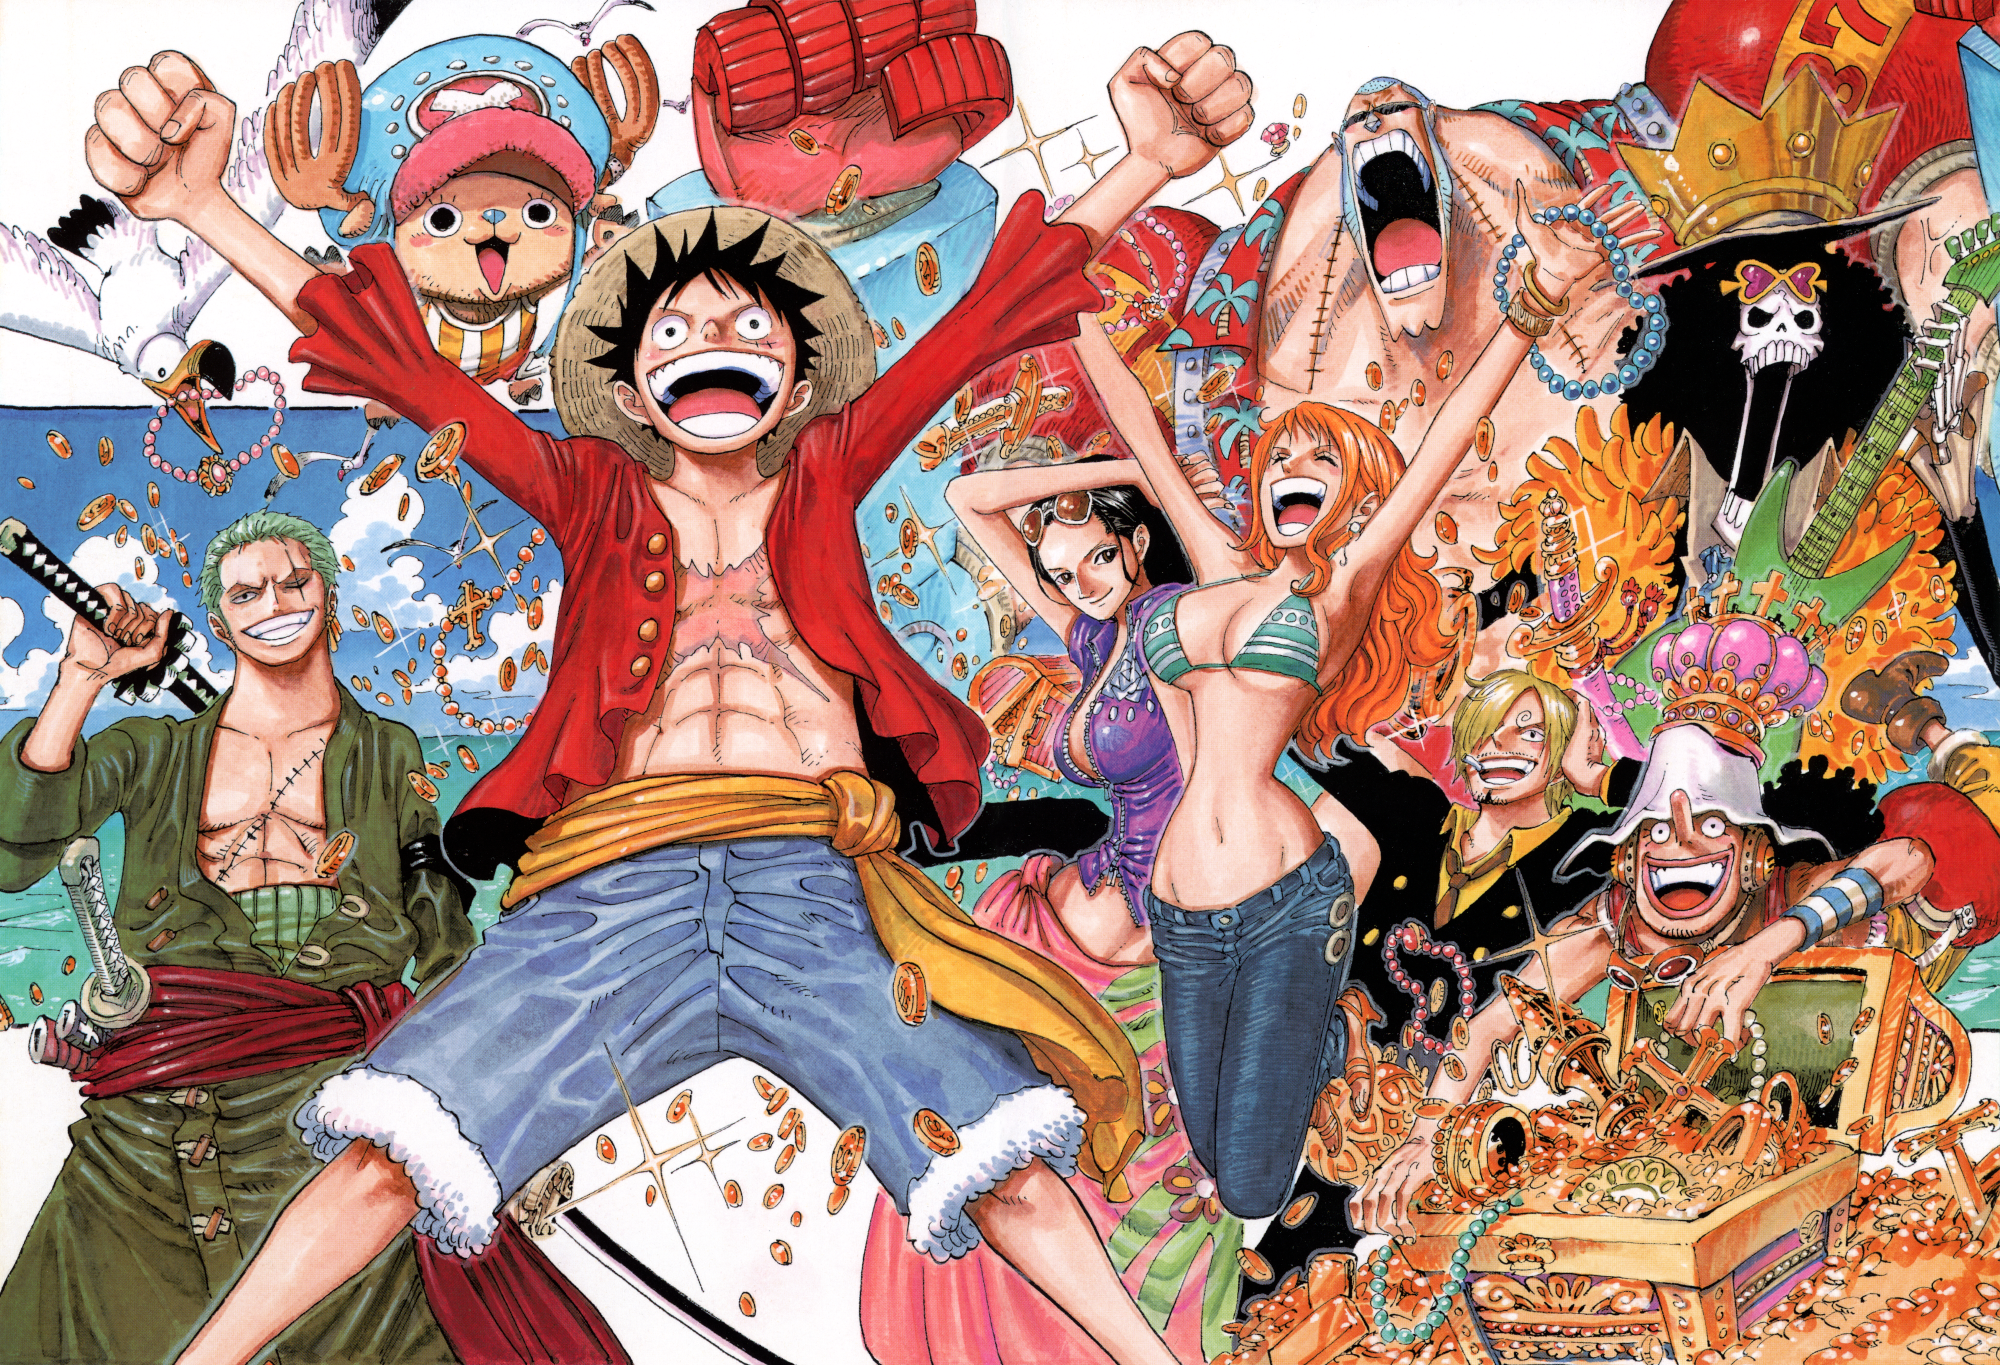 Daftar One Piece After 2 Years Hd Wallpapers  Download Kumpulan